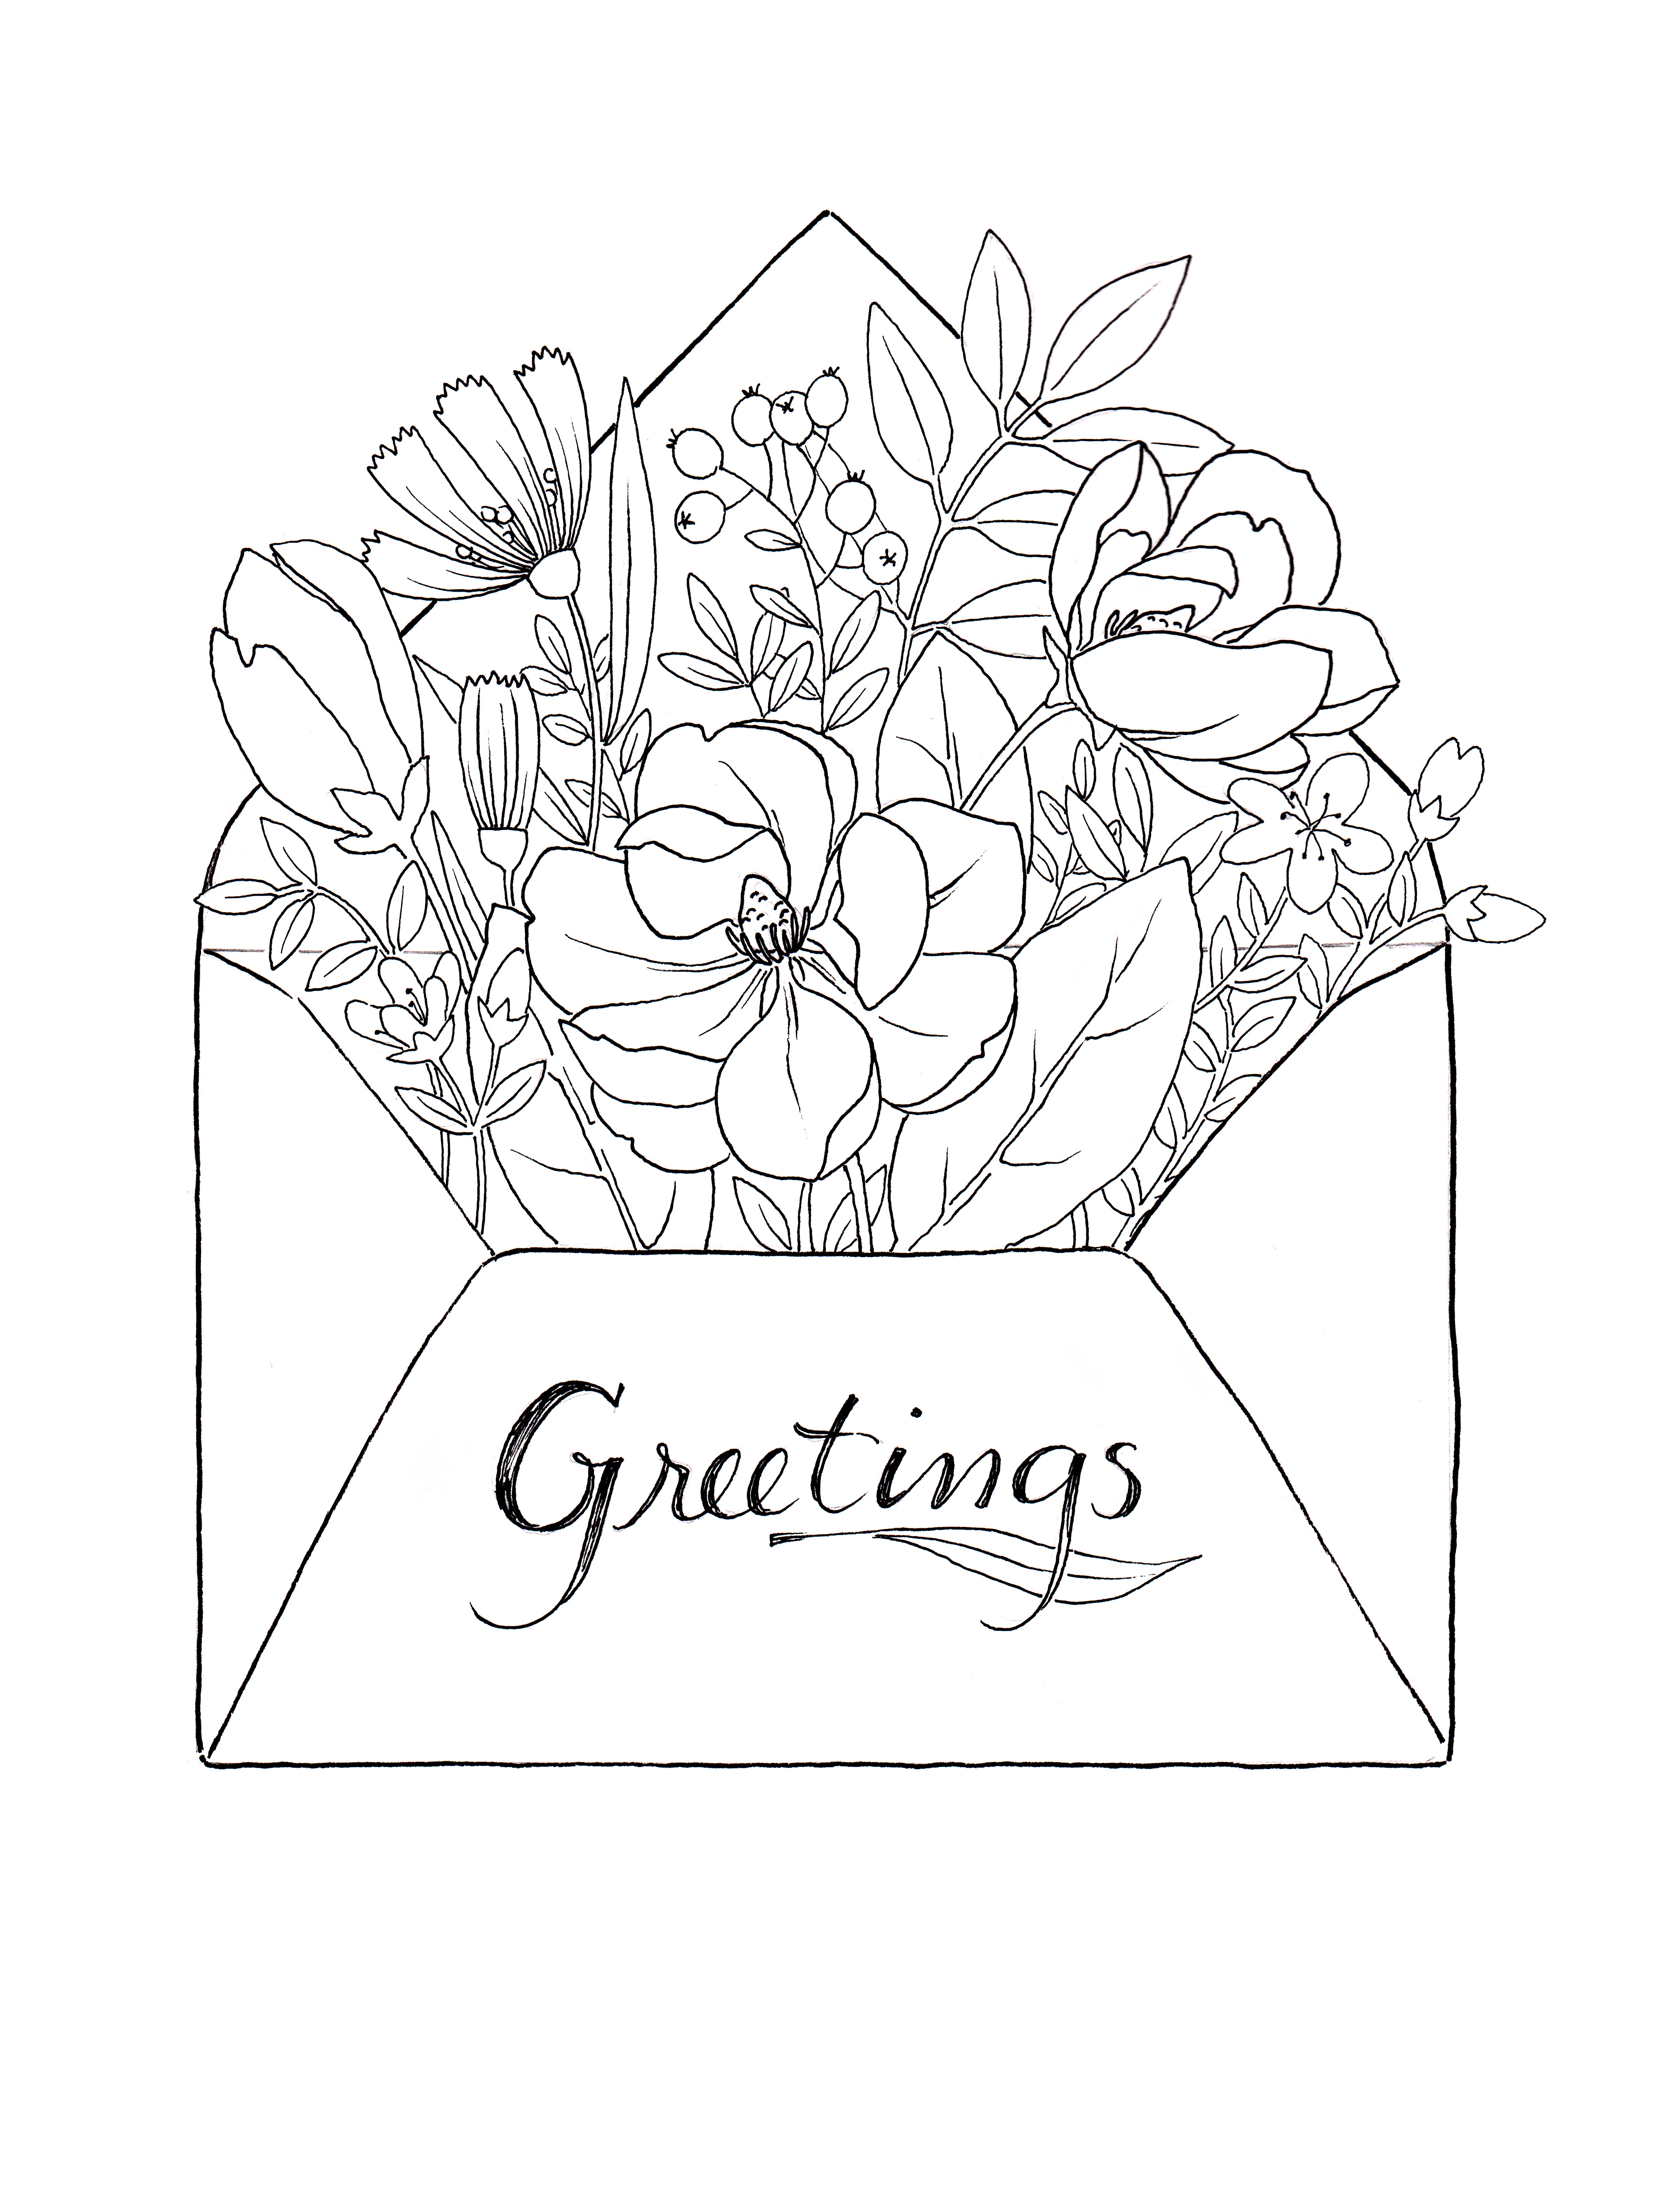 Envelope Coloring Page at GetDrawings | Free download